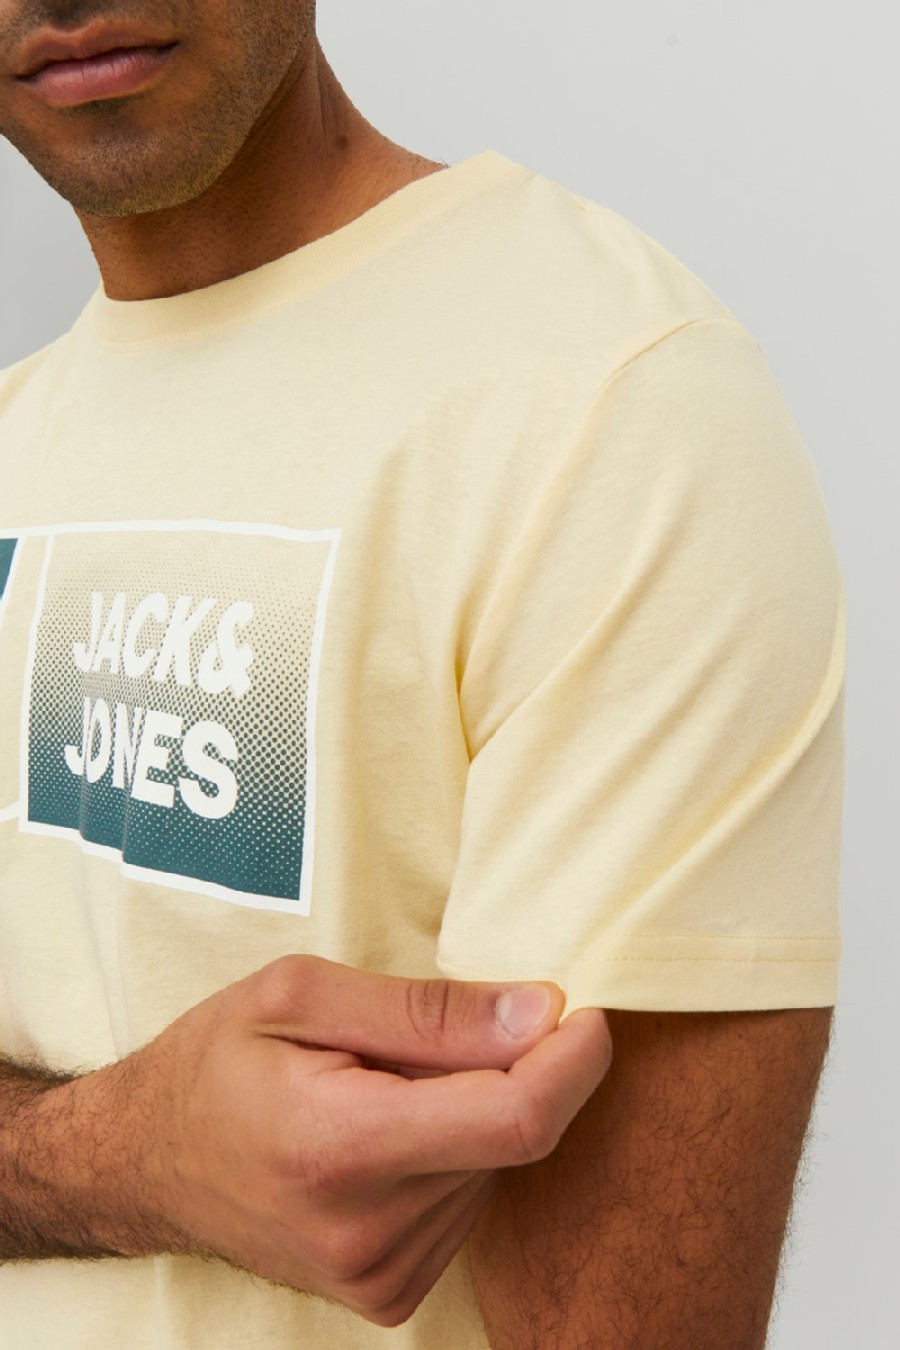 T-shirt JACK & JONES 12228078-Pale-Banana